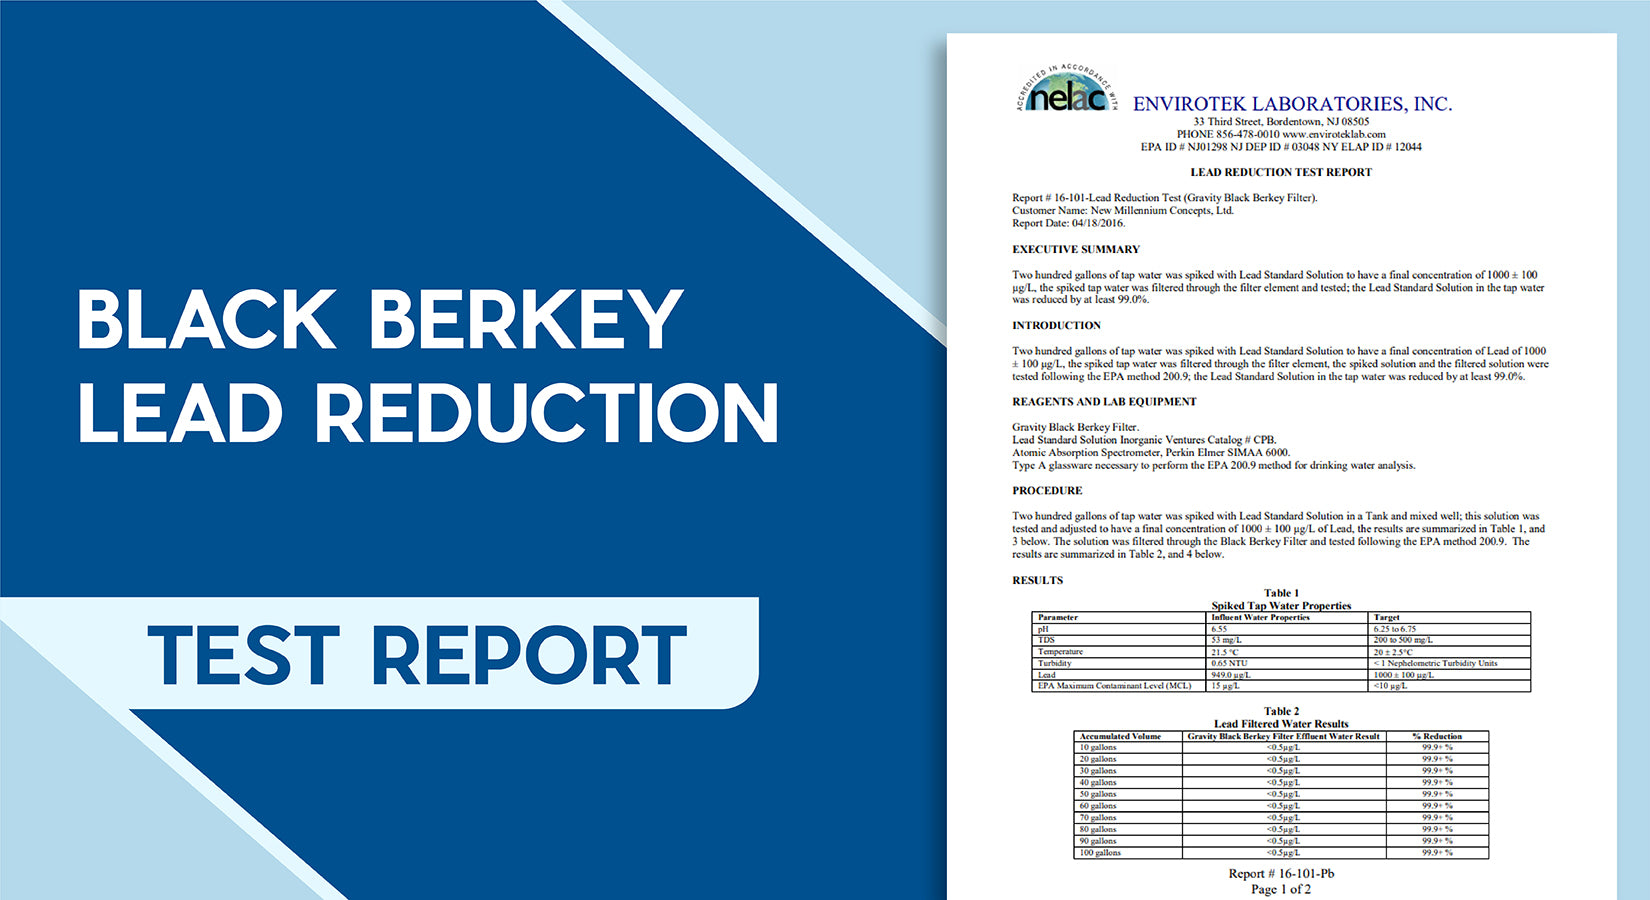 Black Berkey Lead Reduction Test Report